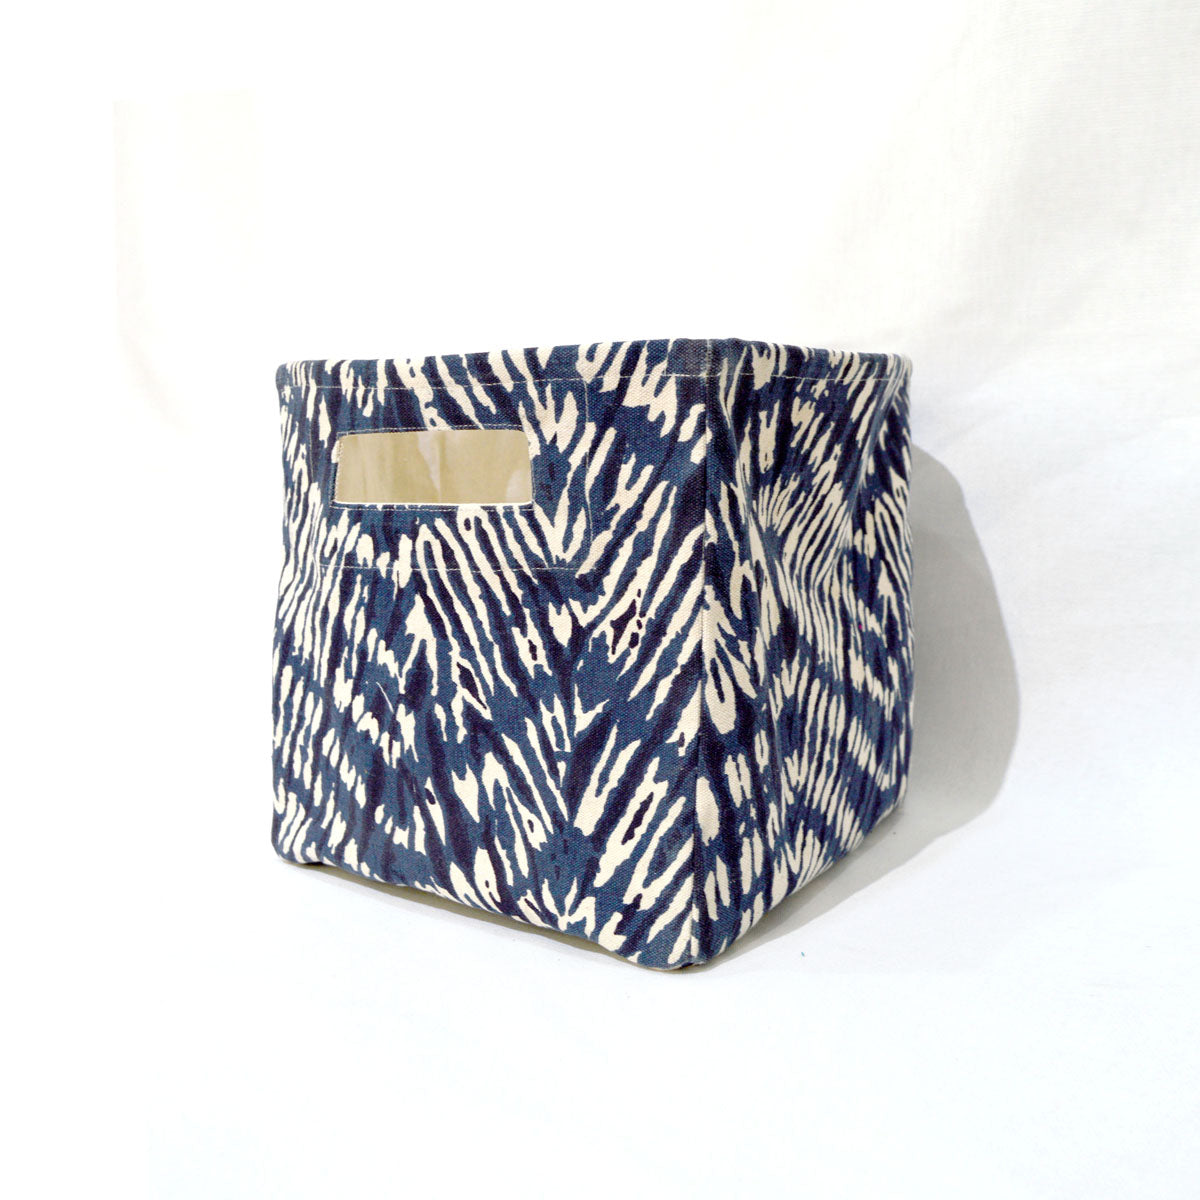 Square Canvas basket, Shibori print, chevron pattern, blue and off white, storage basket, fabric bin, sizes available